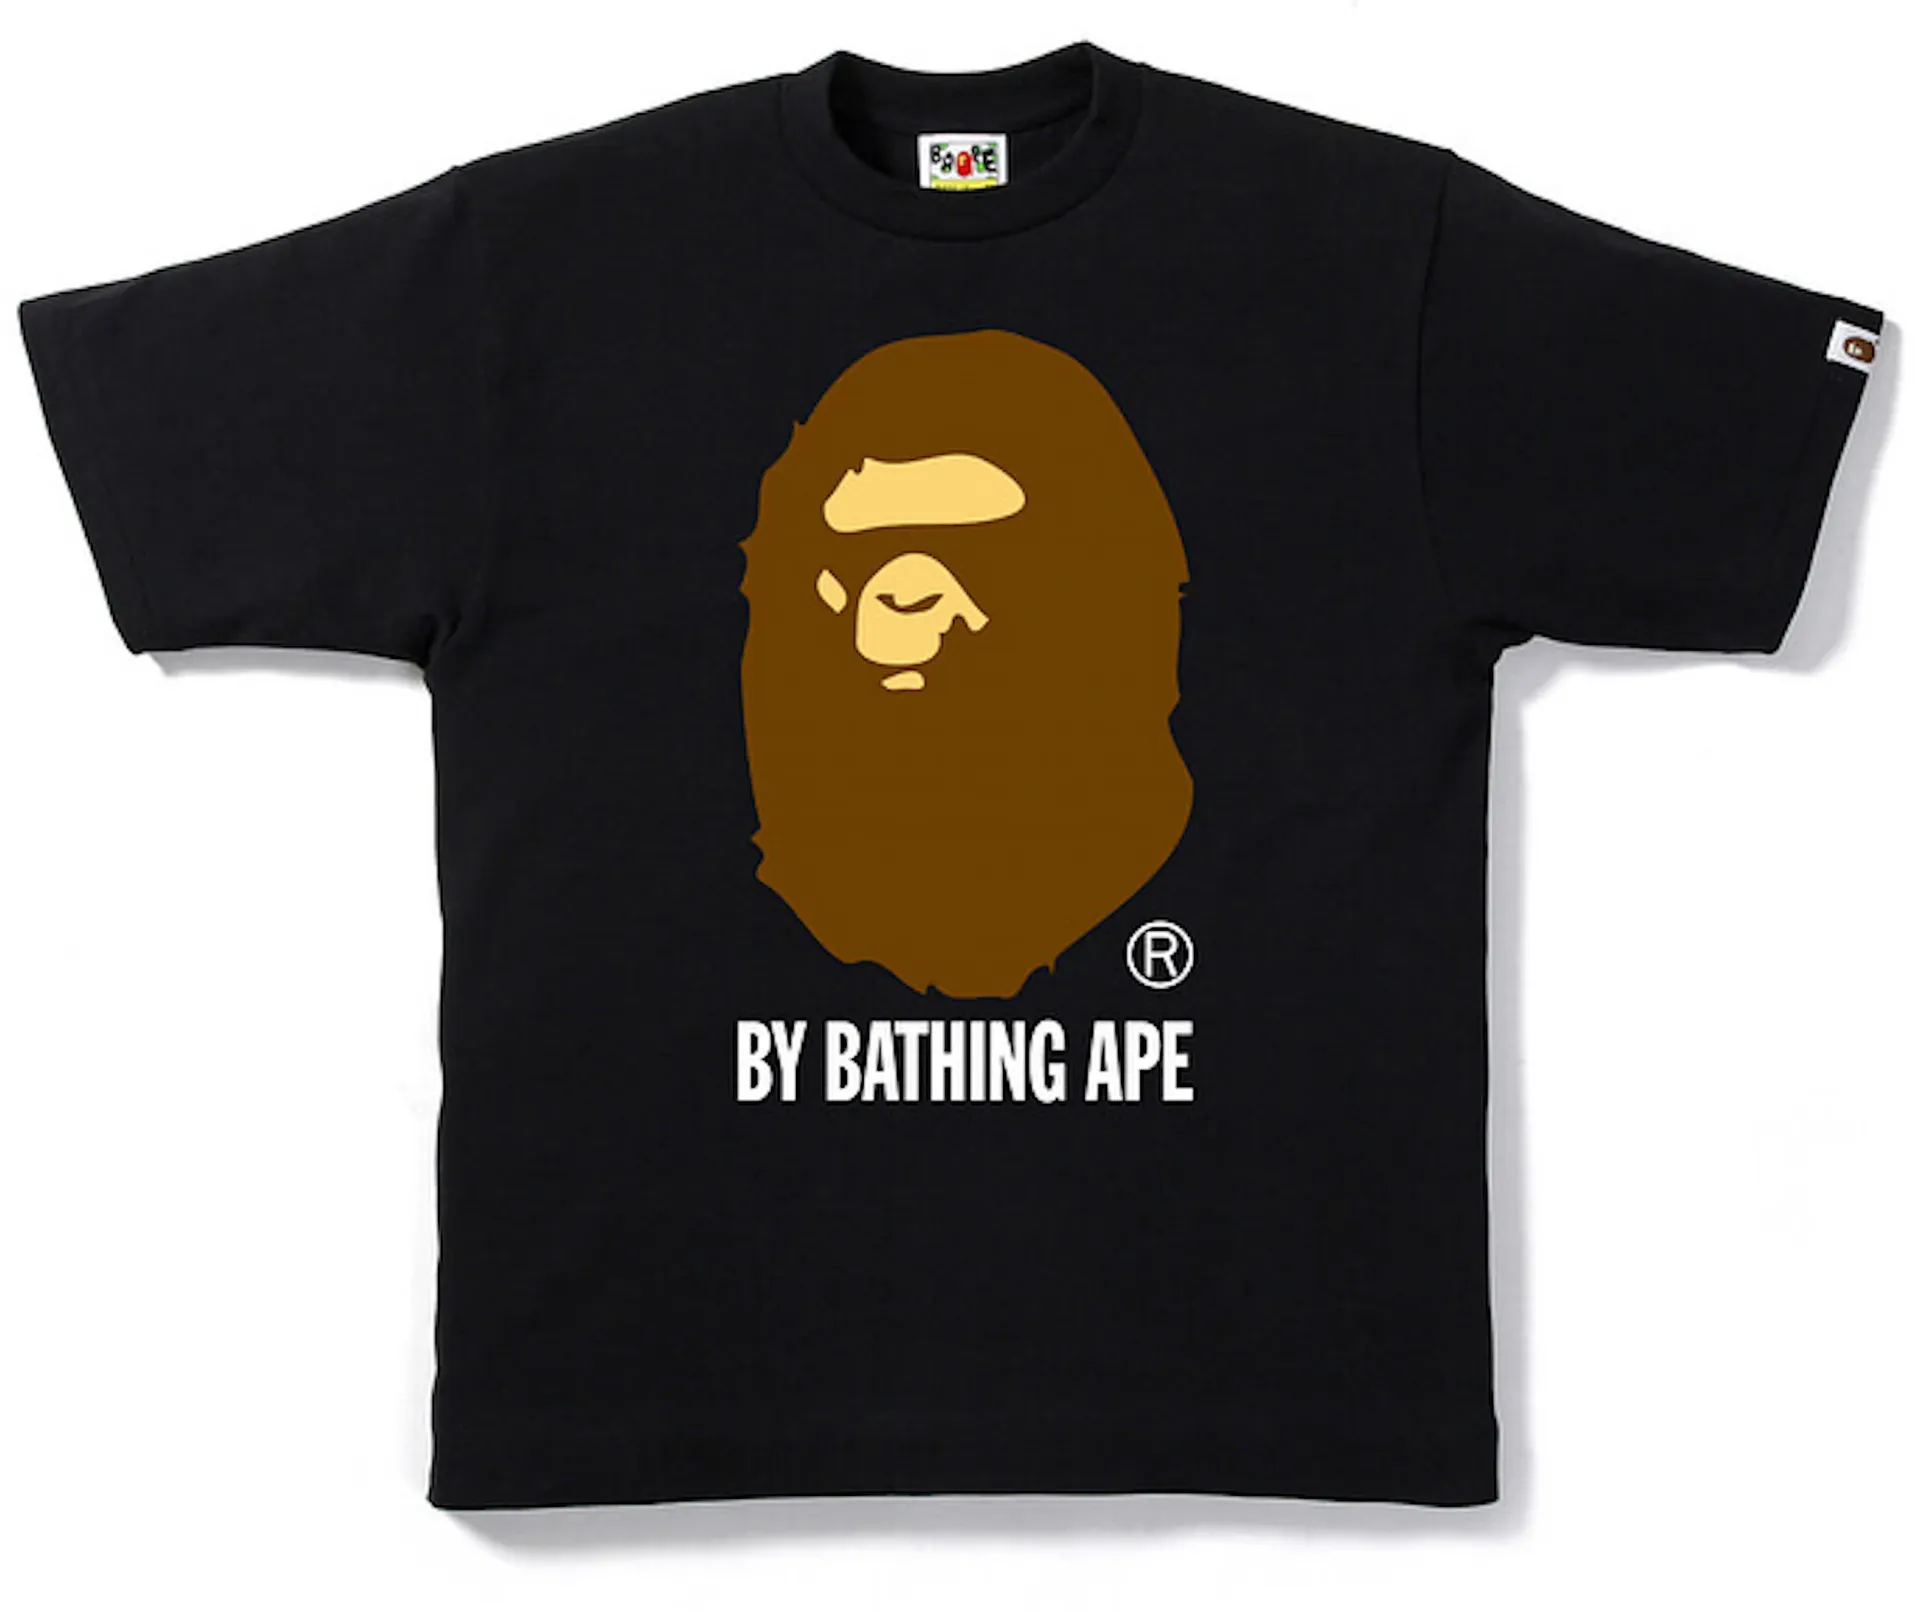 Bape By Bathing Ape Tee 'Black'